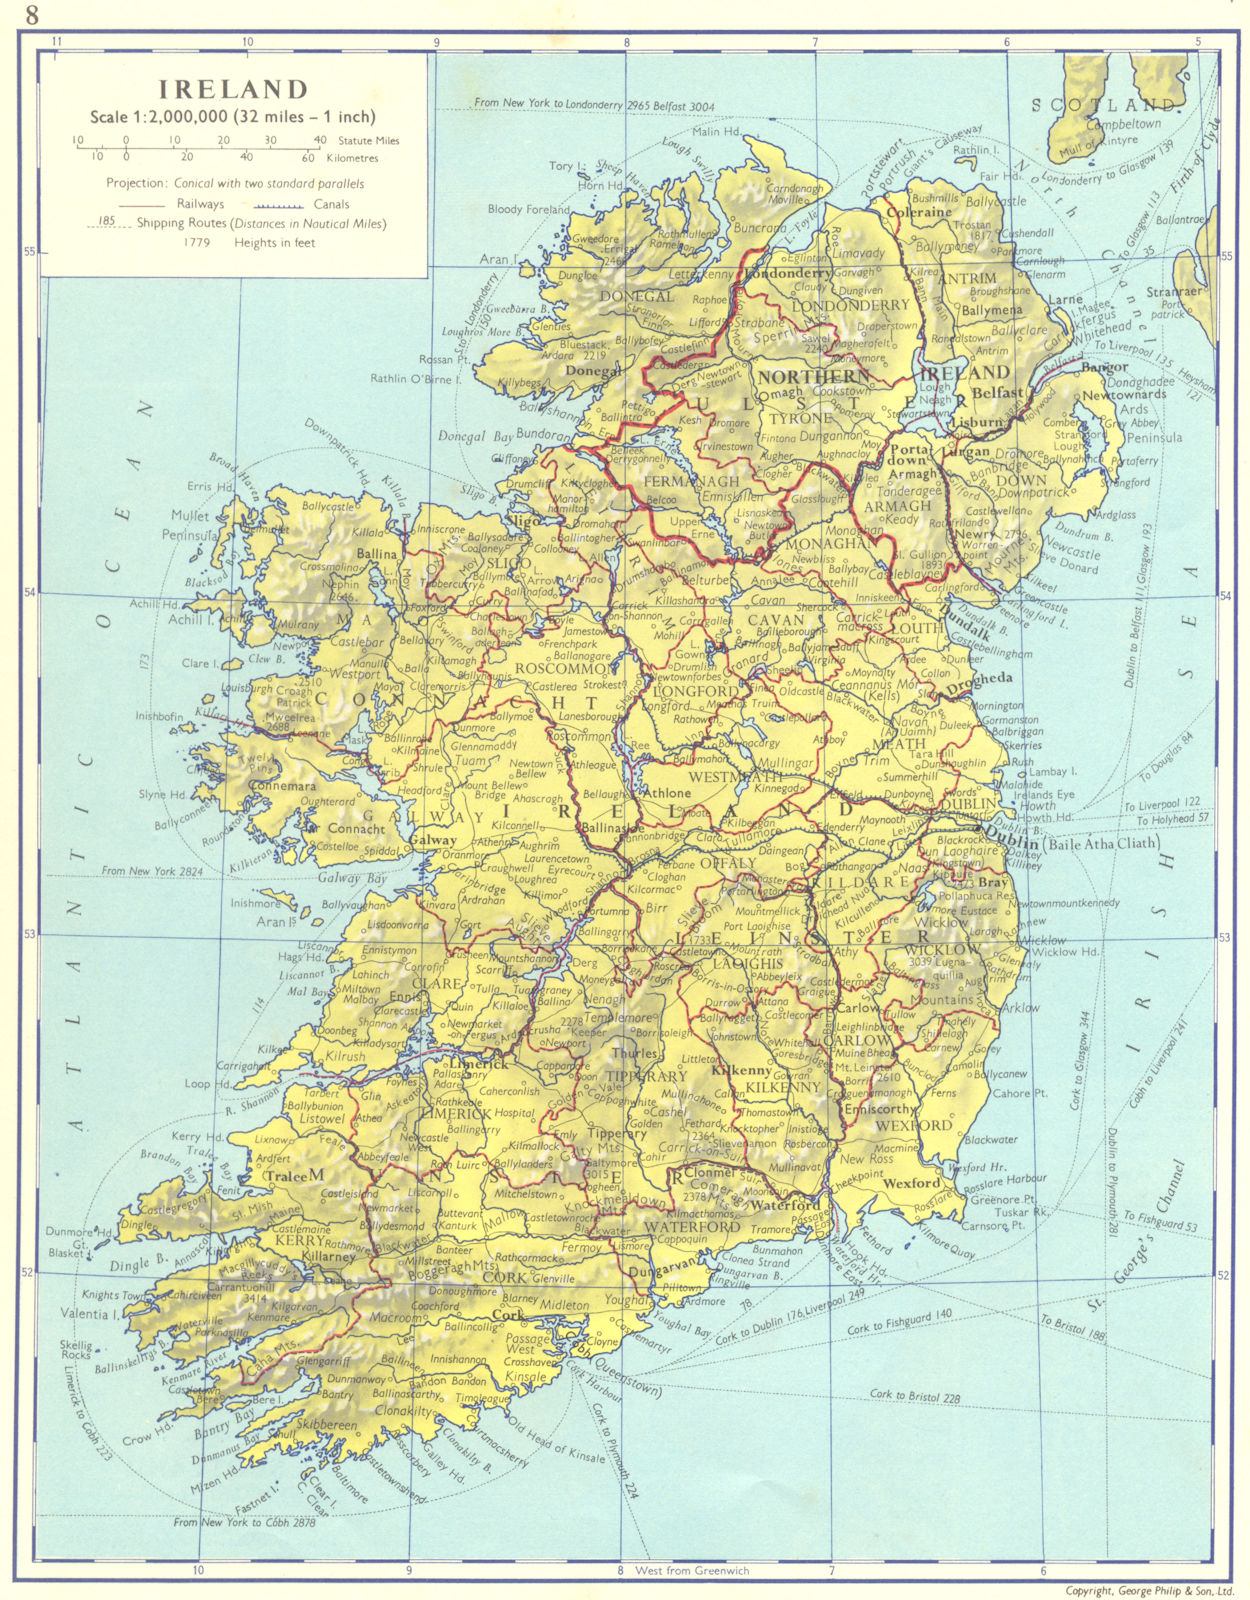 IRELAND. Ireland 1962 old vintage map plan chart